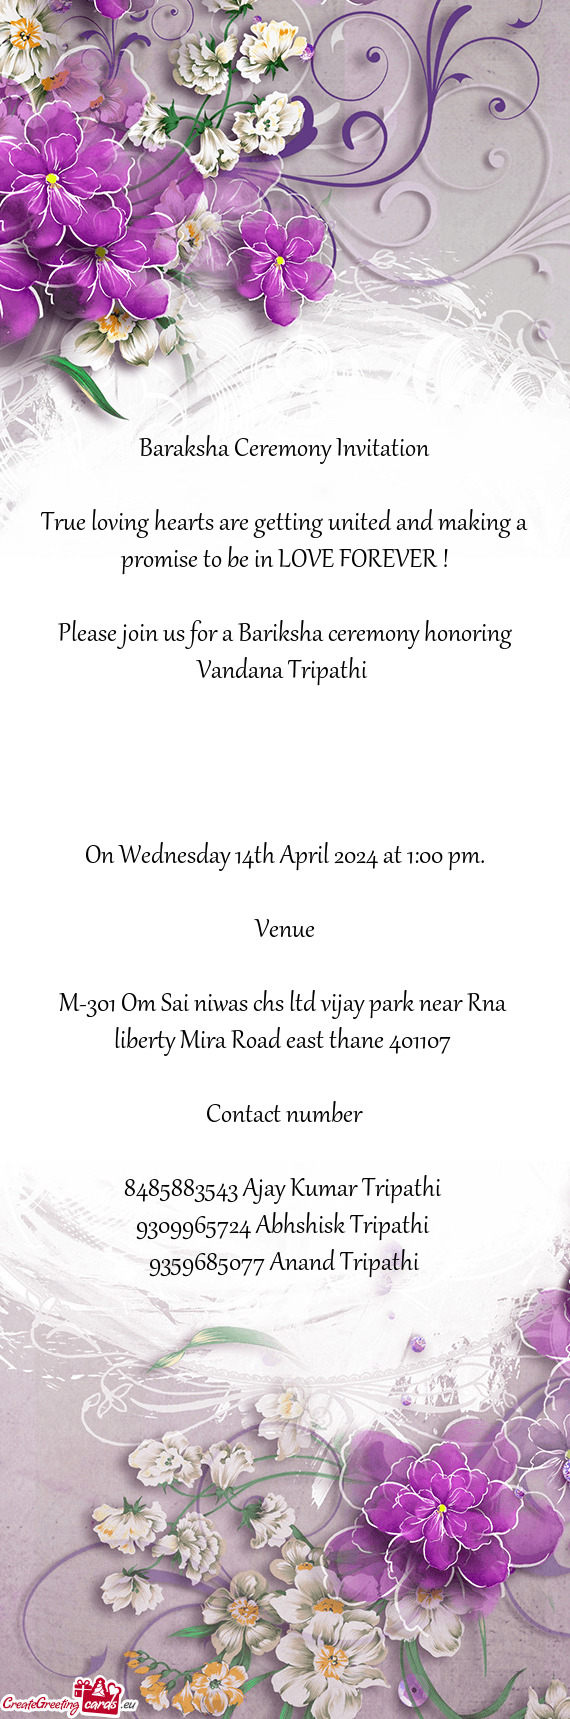 Baraksha Ceremony Invitation